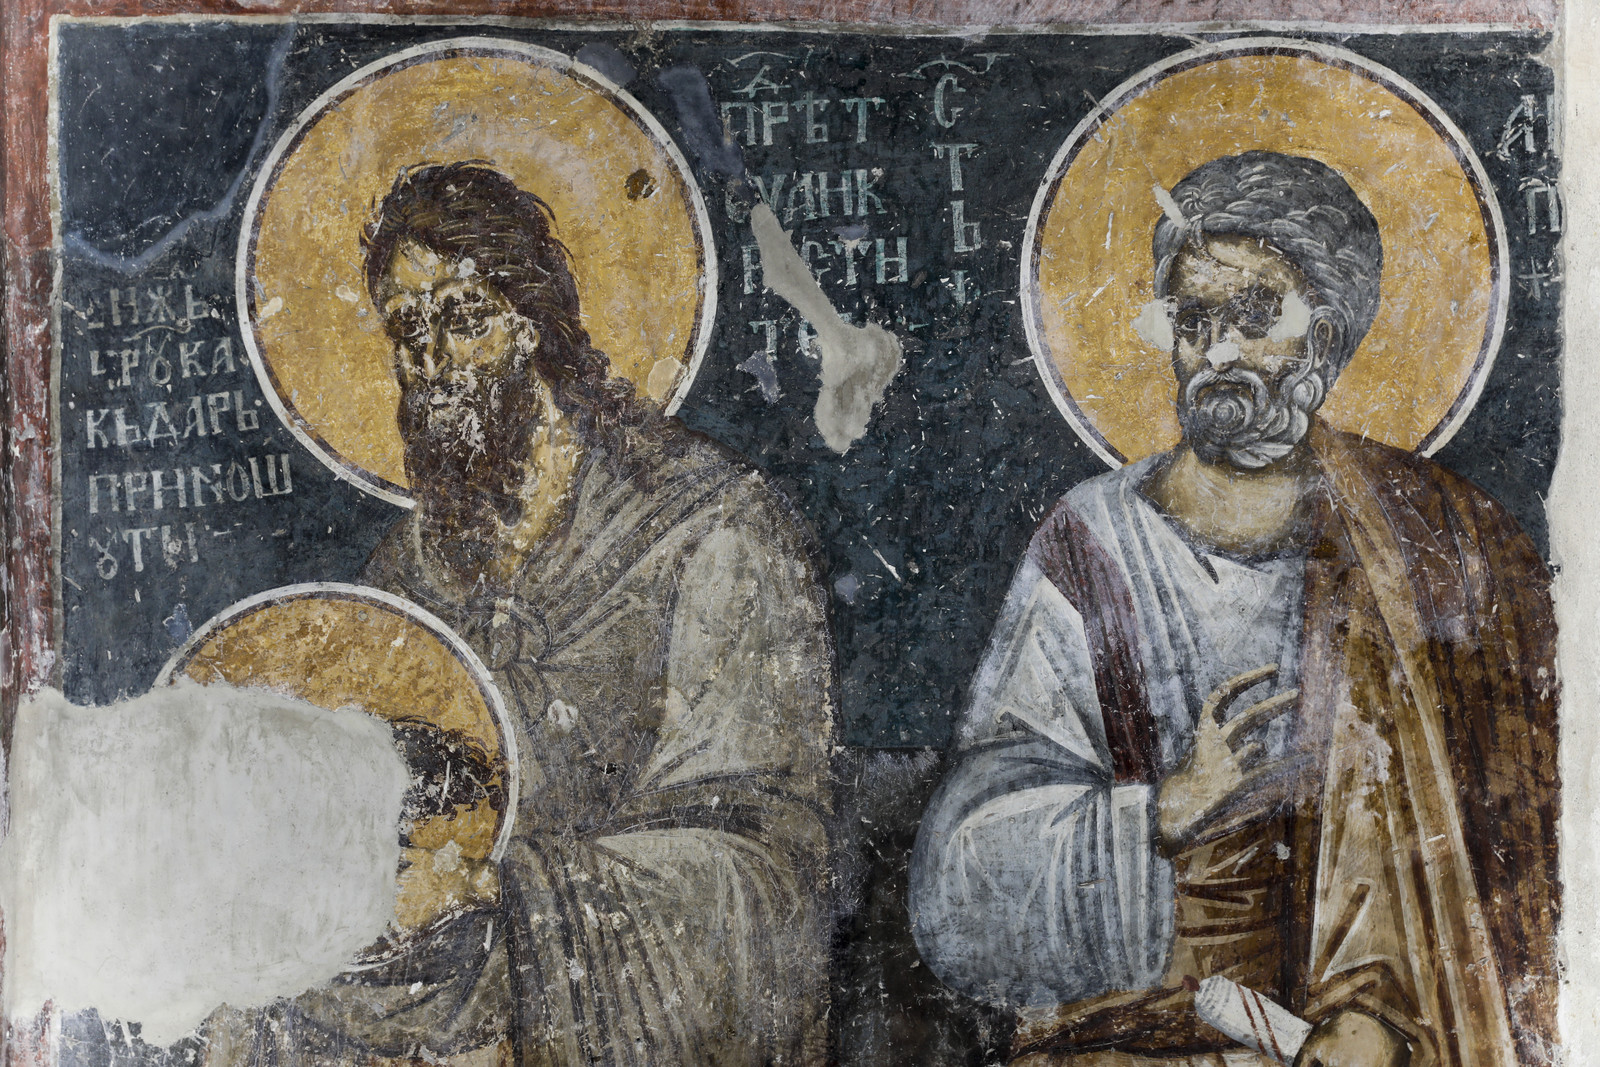 St. John the Baptist (Kephalophoros) and St. Peter the Apostle